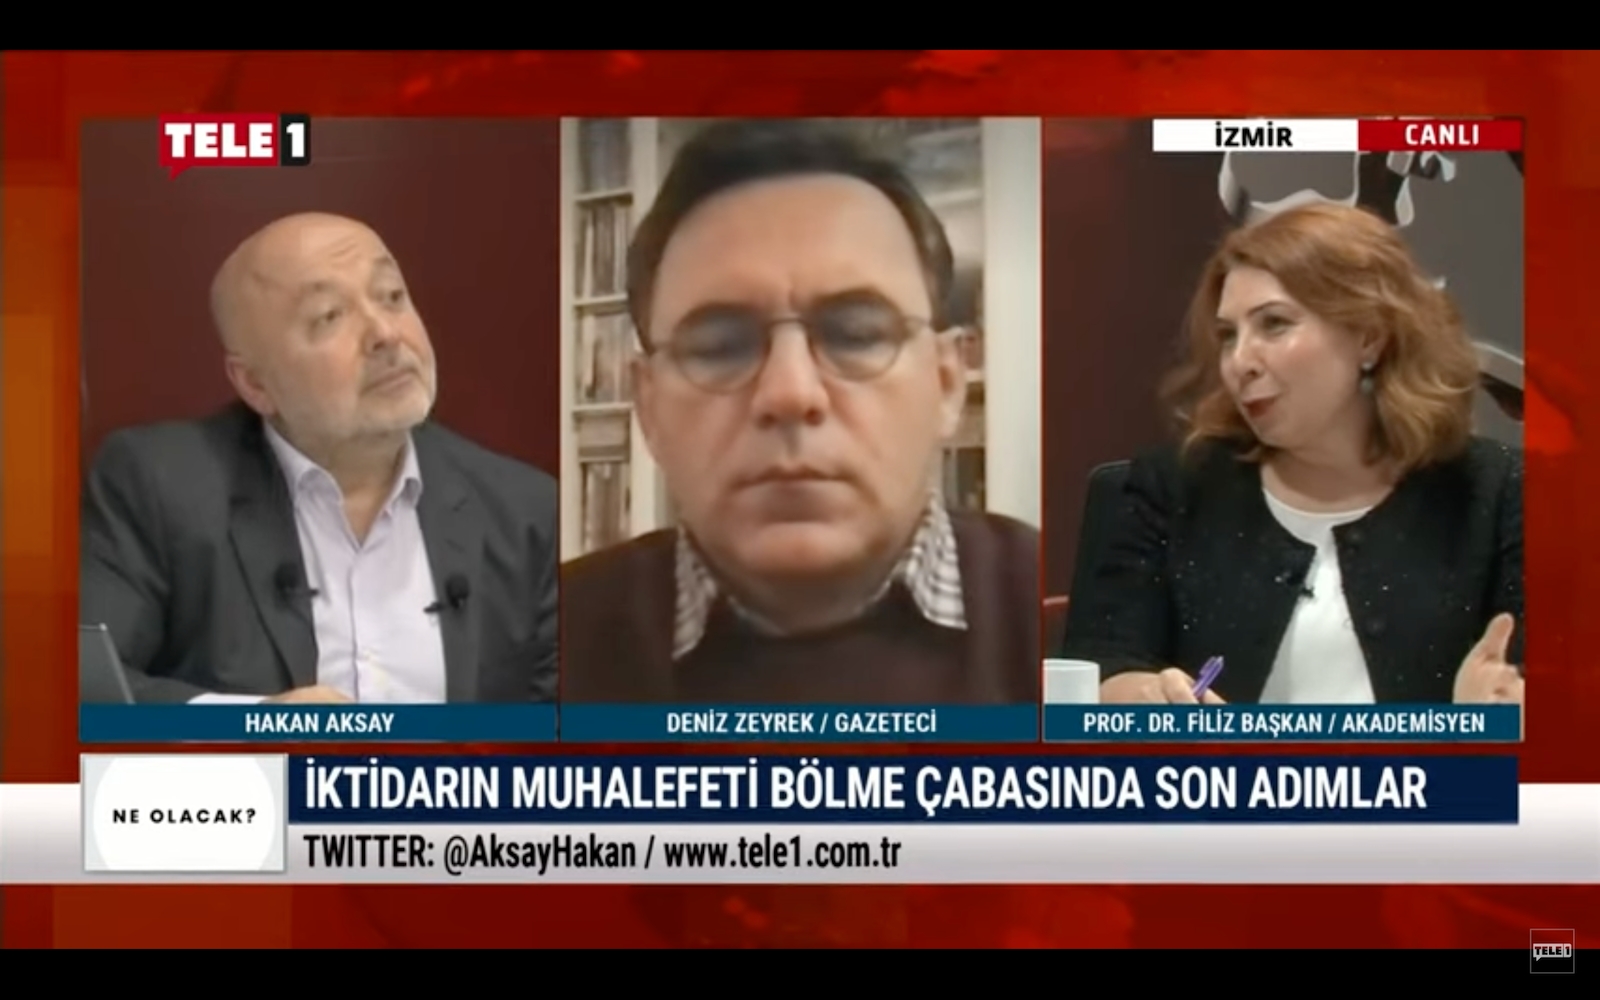 Filiz Başkan was a guest of Tele1 Tv